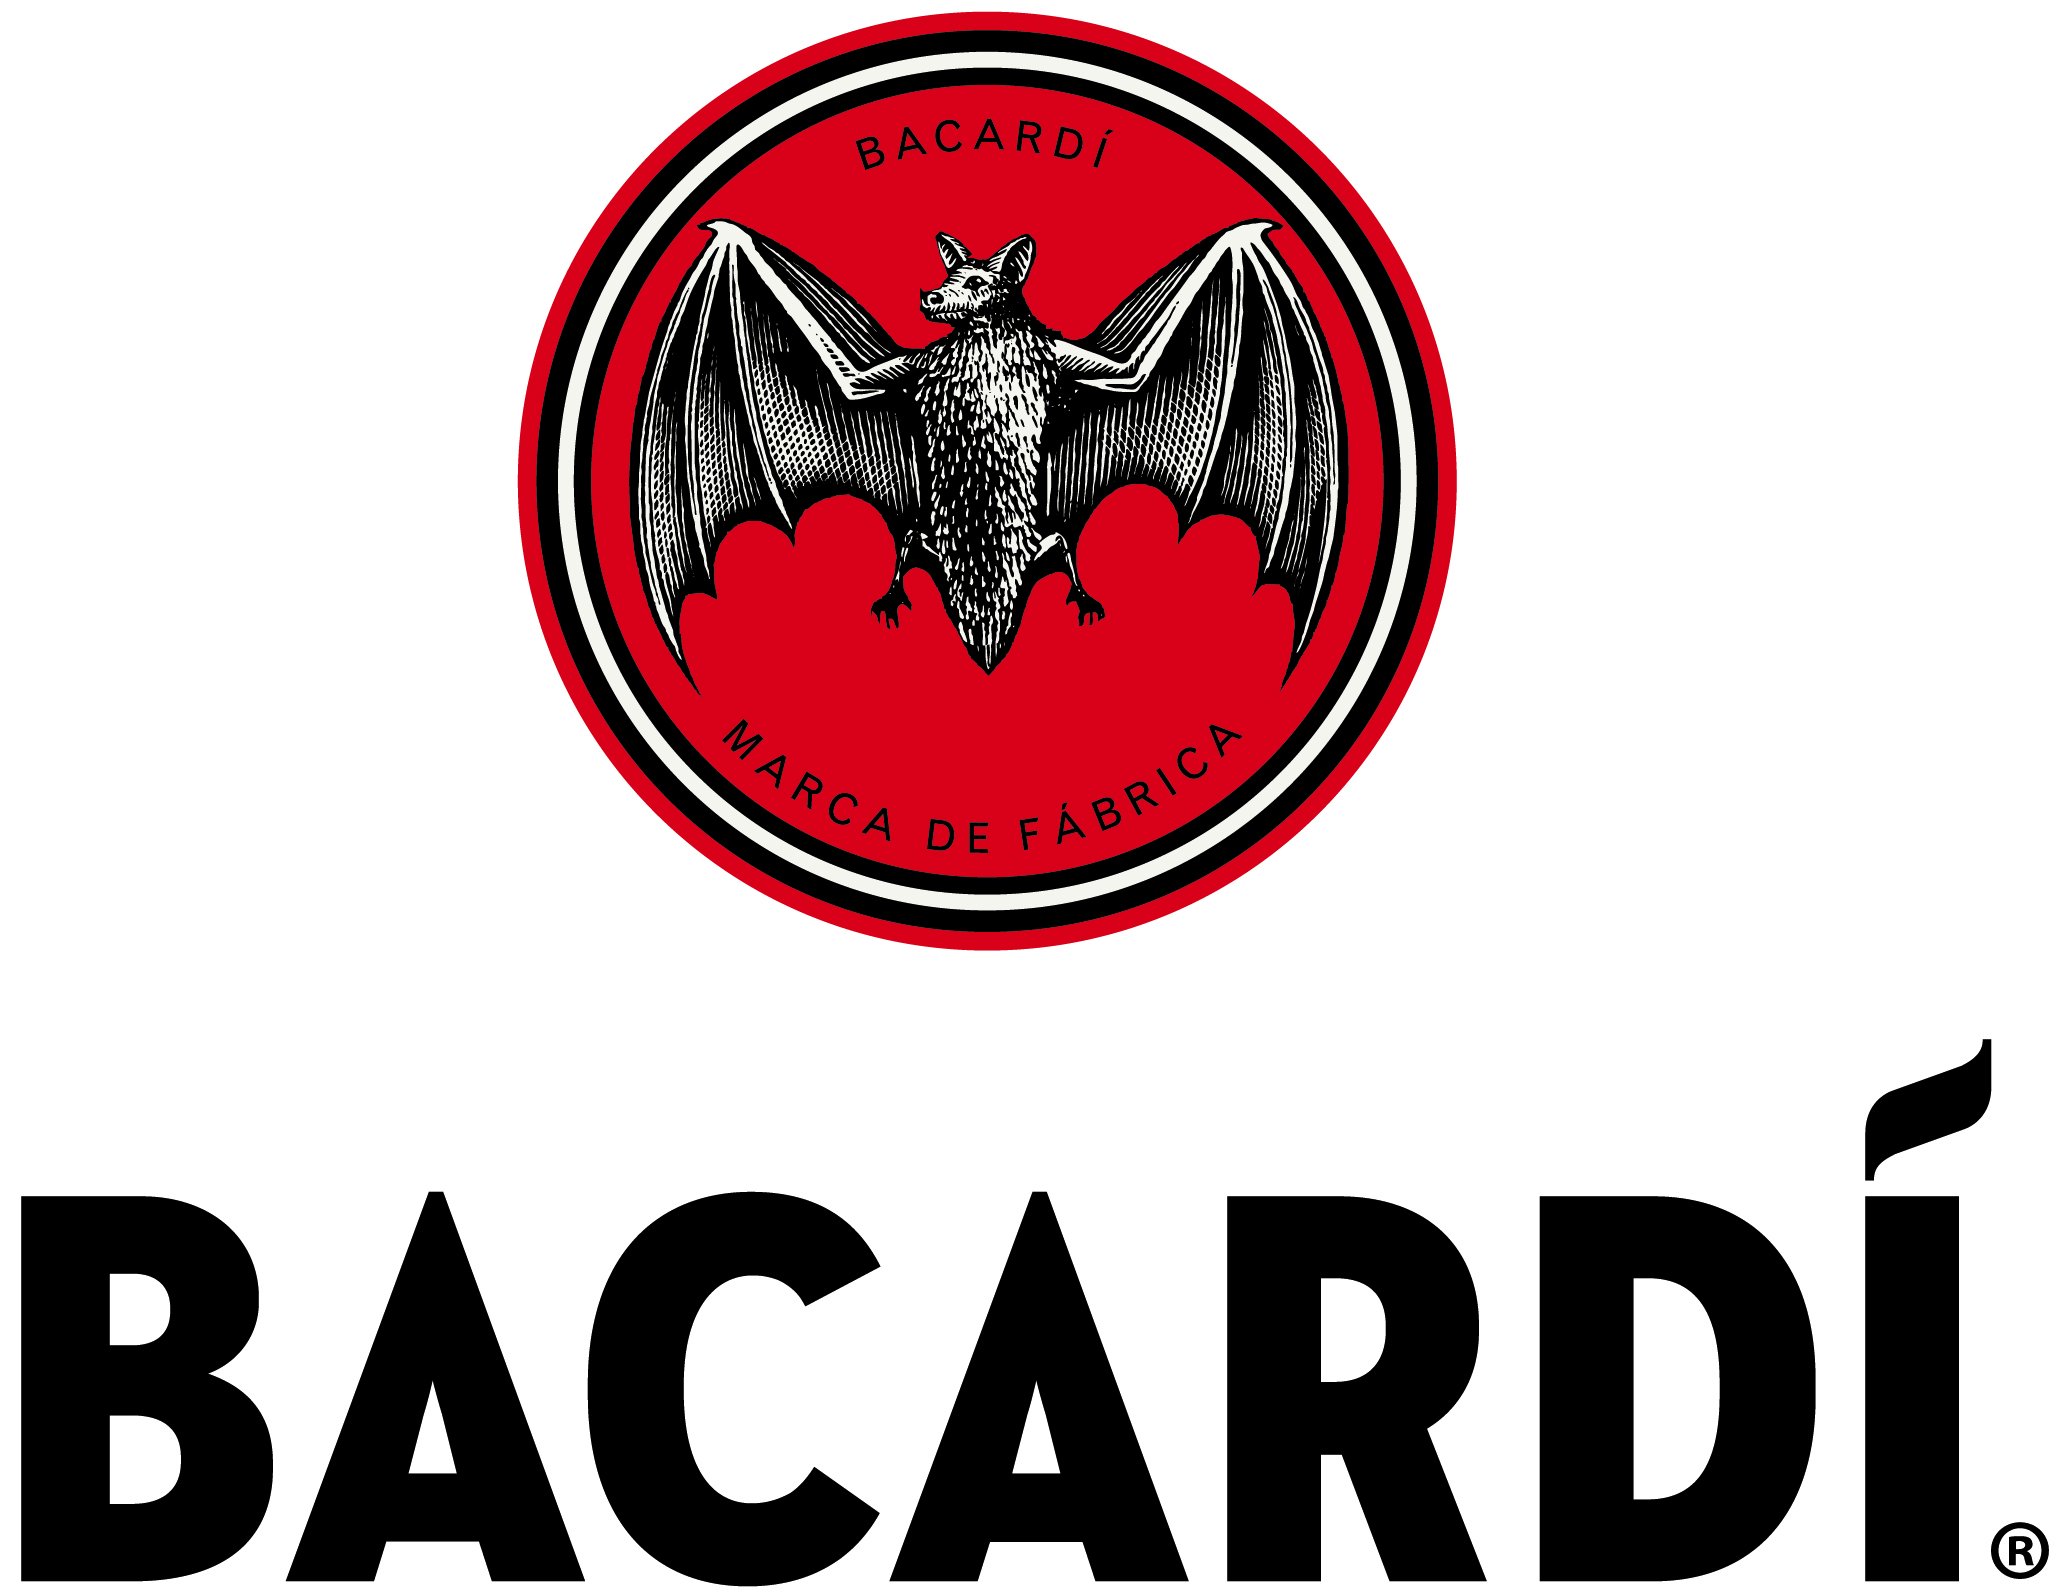 Bacardi primary logo cmyk[5]